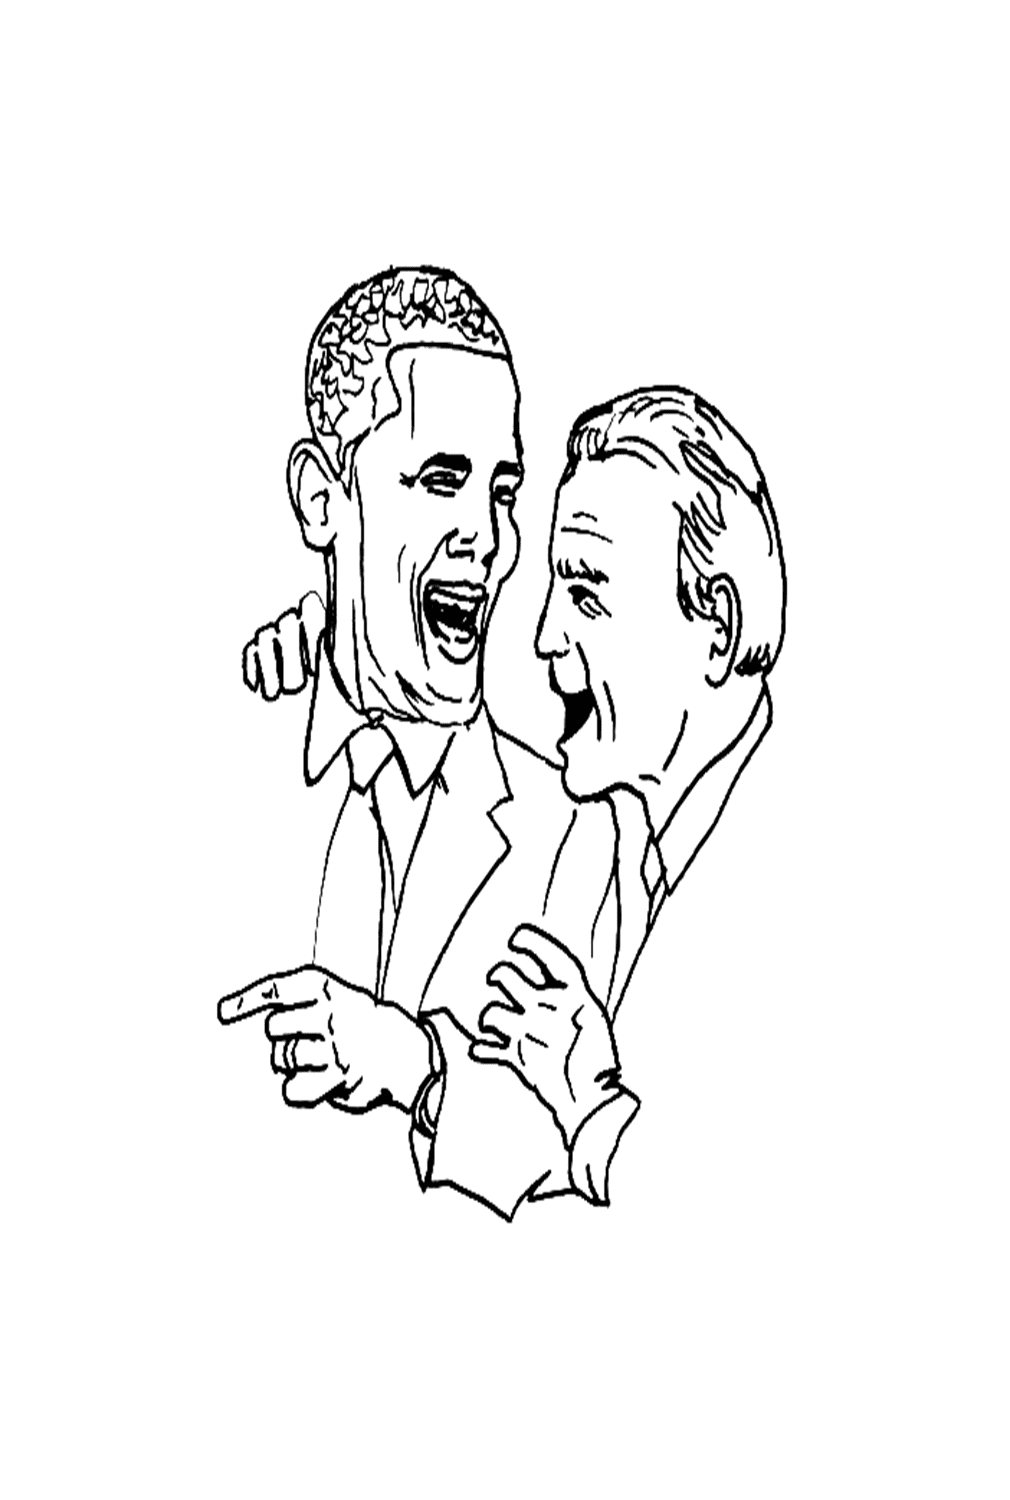 Joe Biden Vs Obama Coloring Page